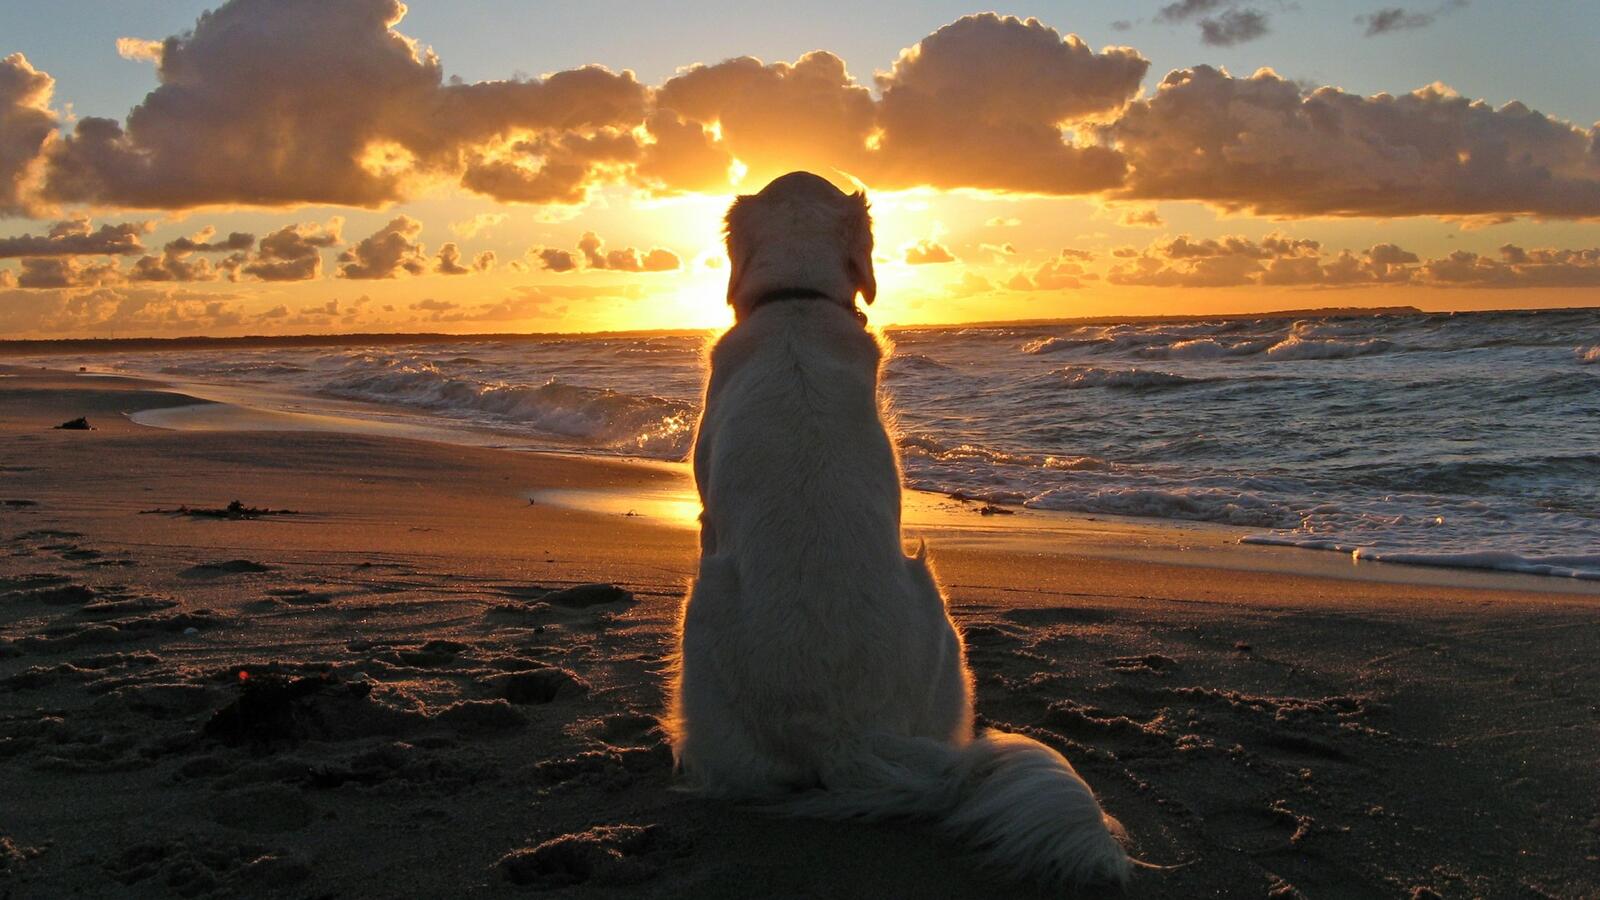 Wallpapers dog beach sunset on the desktop